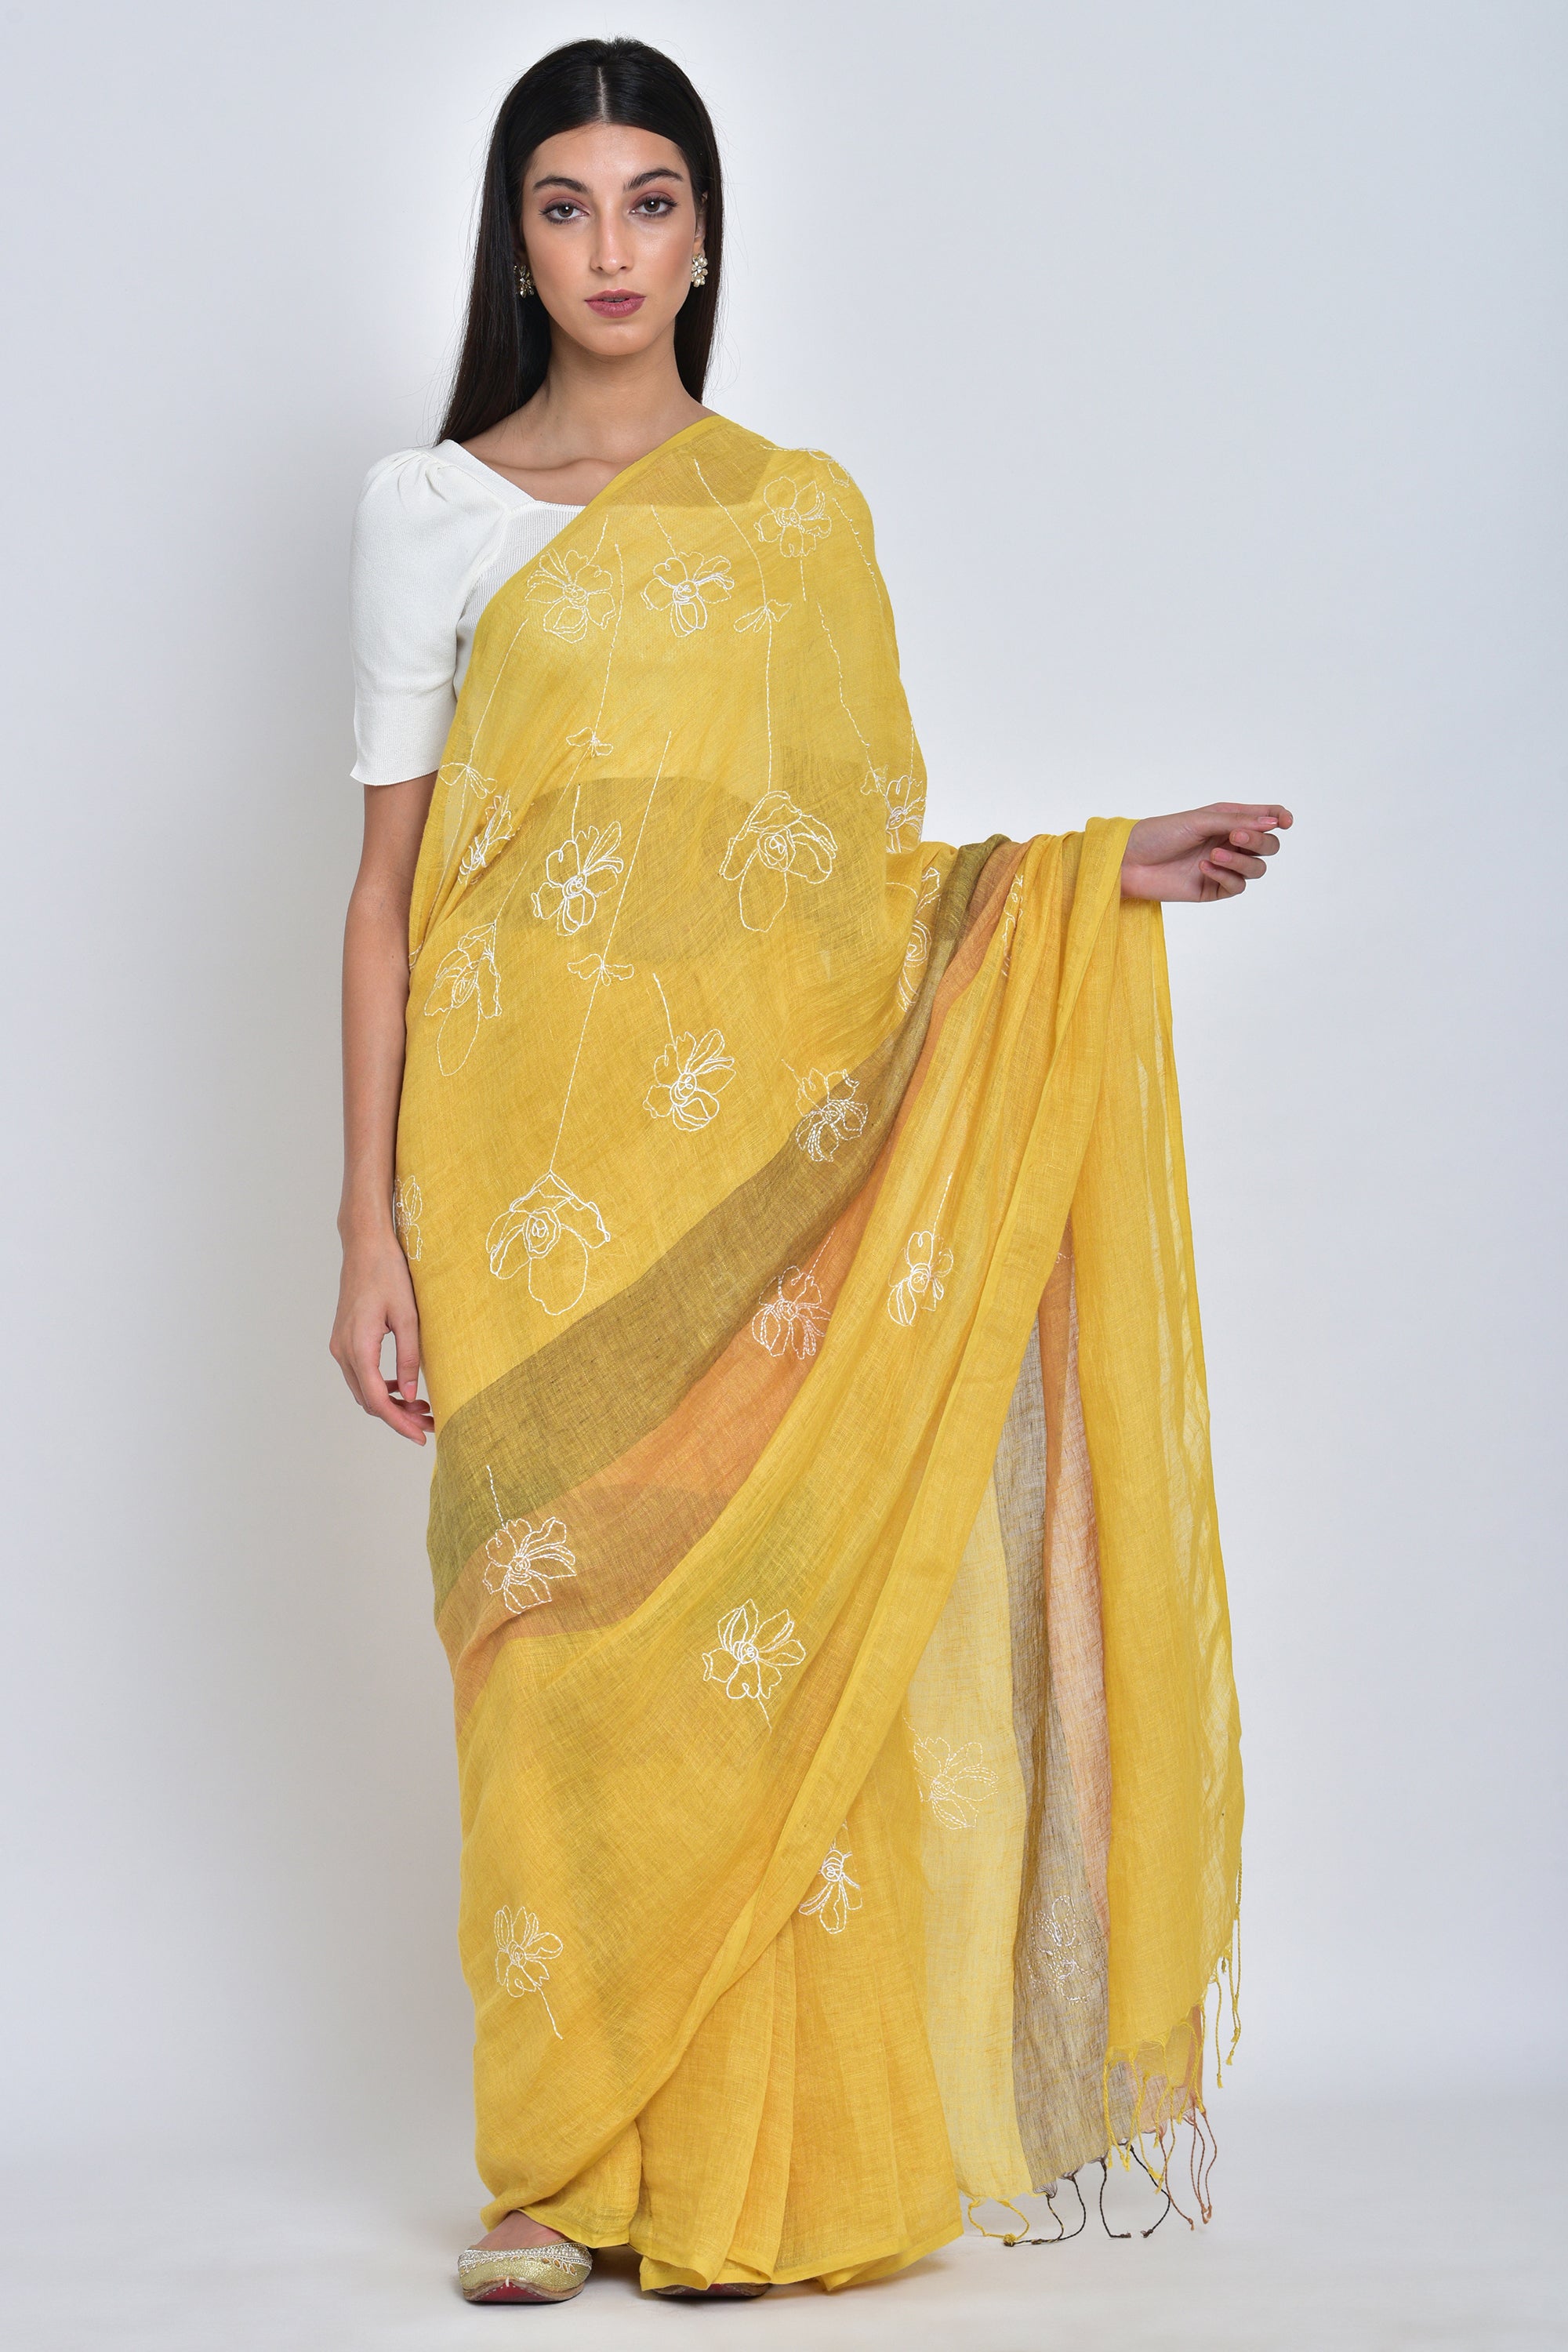 Aadya | 100% Handwoven Linen Sari with Kantha Embroidery - kavana.in